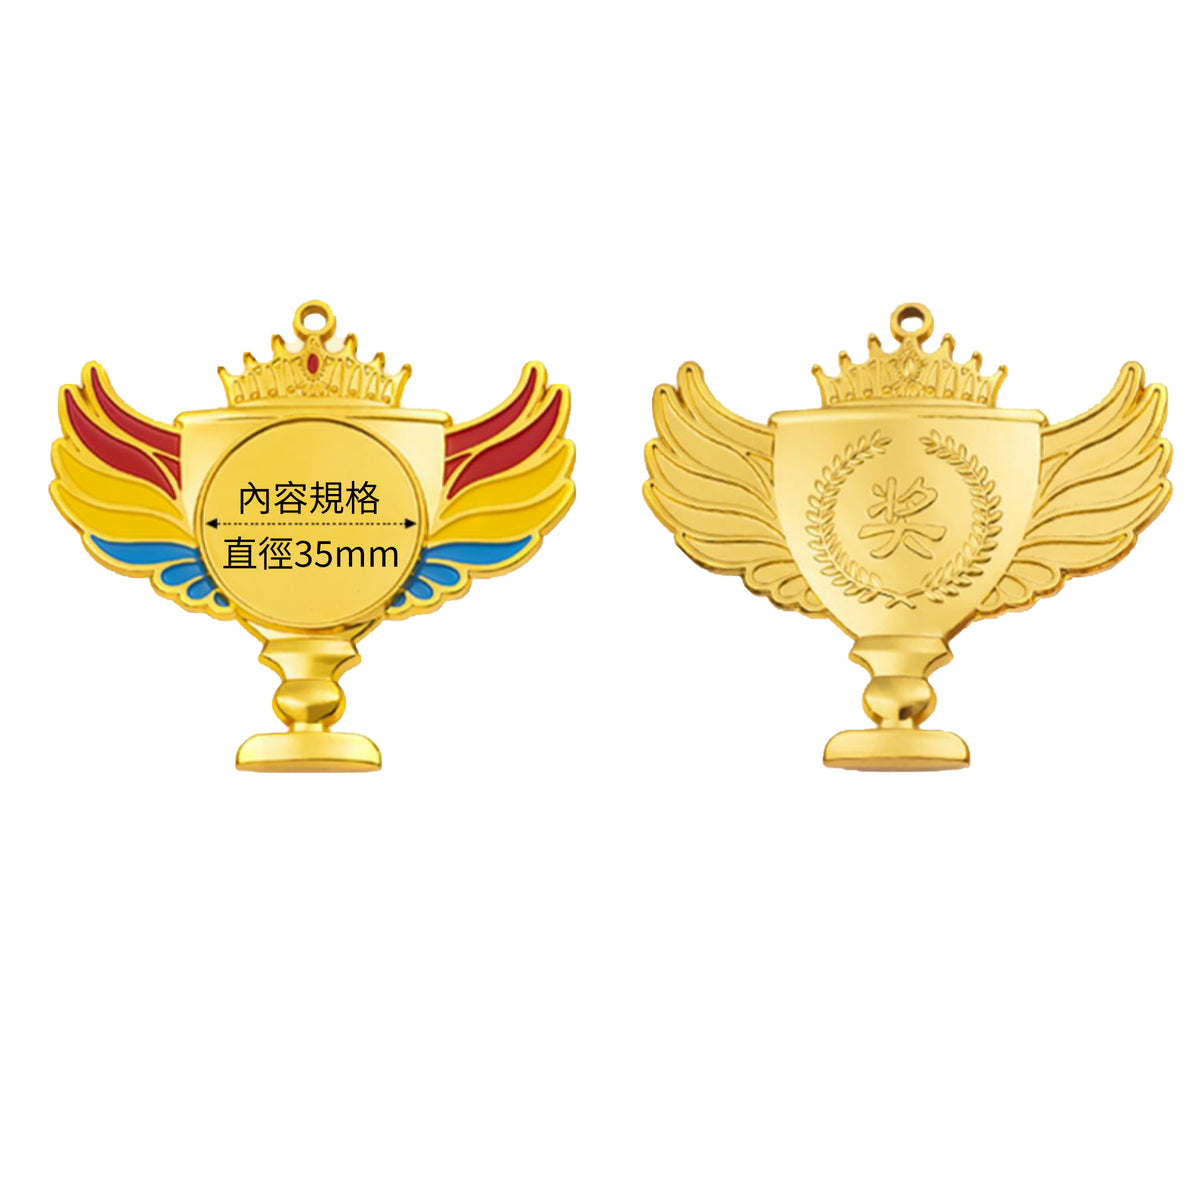 Creative Children And Youth Medals | 通用翅膀獎座獎牌訂製 運動會掛牌榮譽獎章